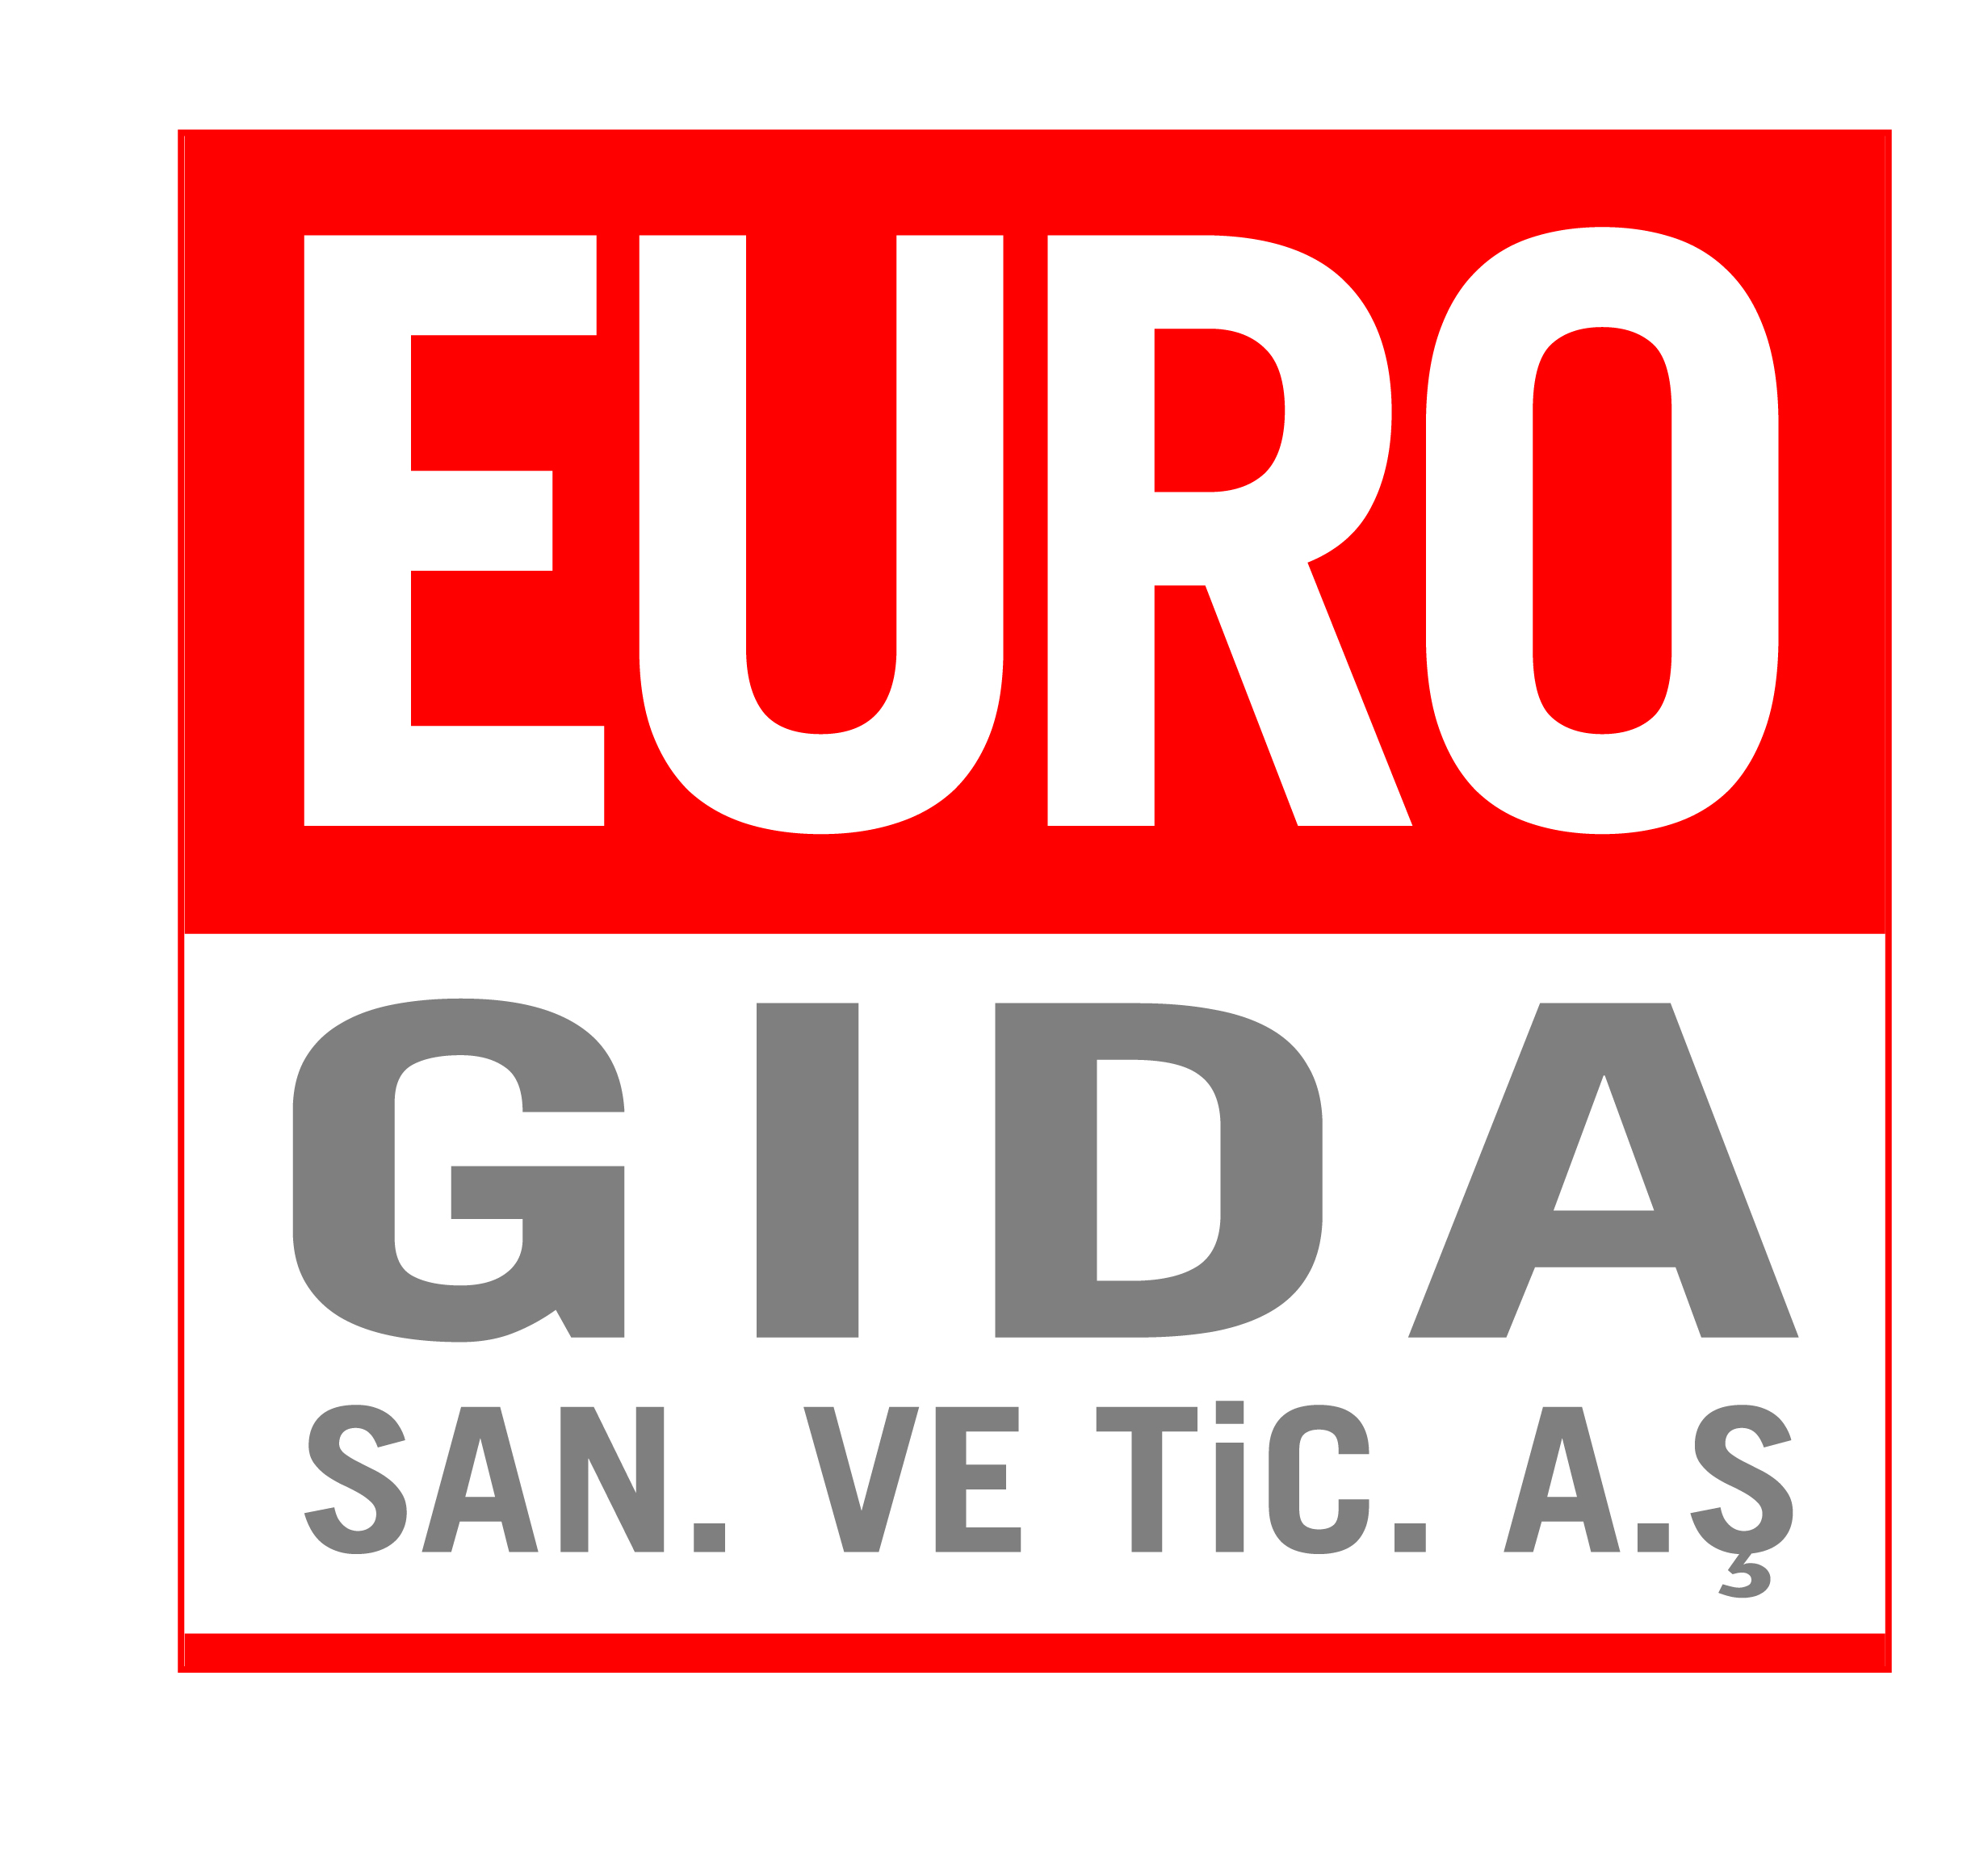 Euro Gida San. ve Tic. A.s.